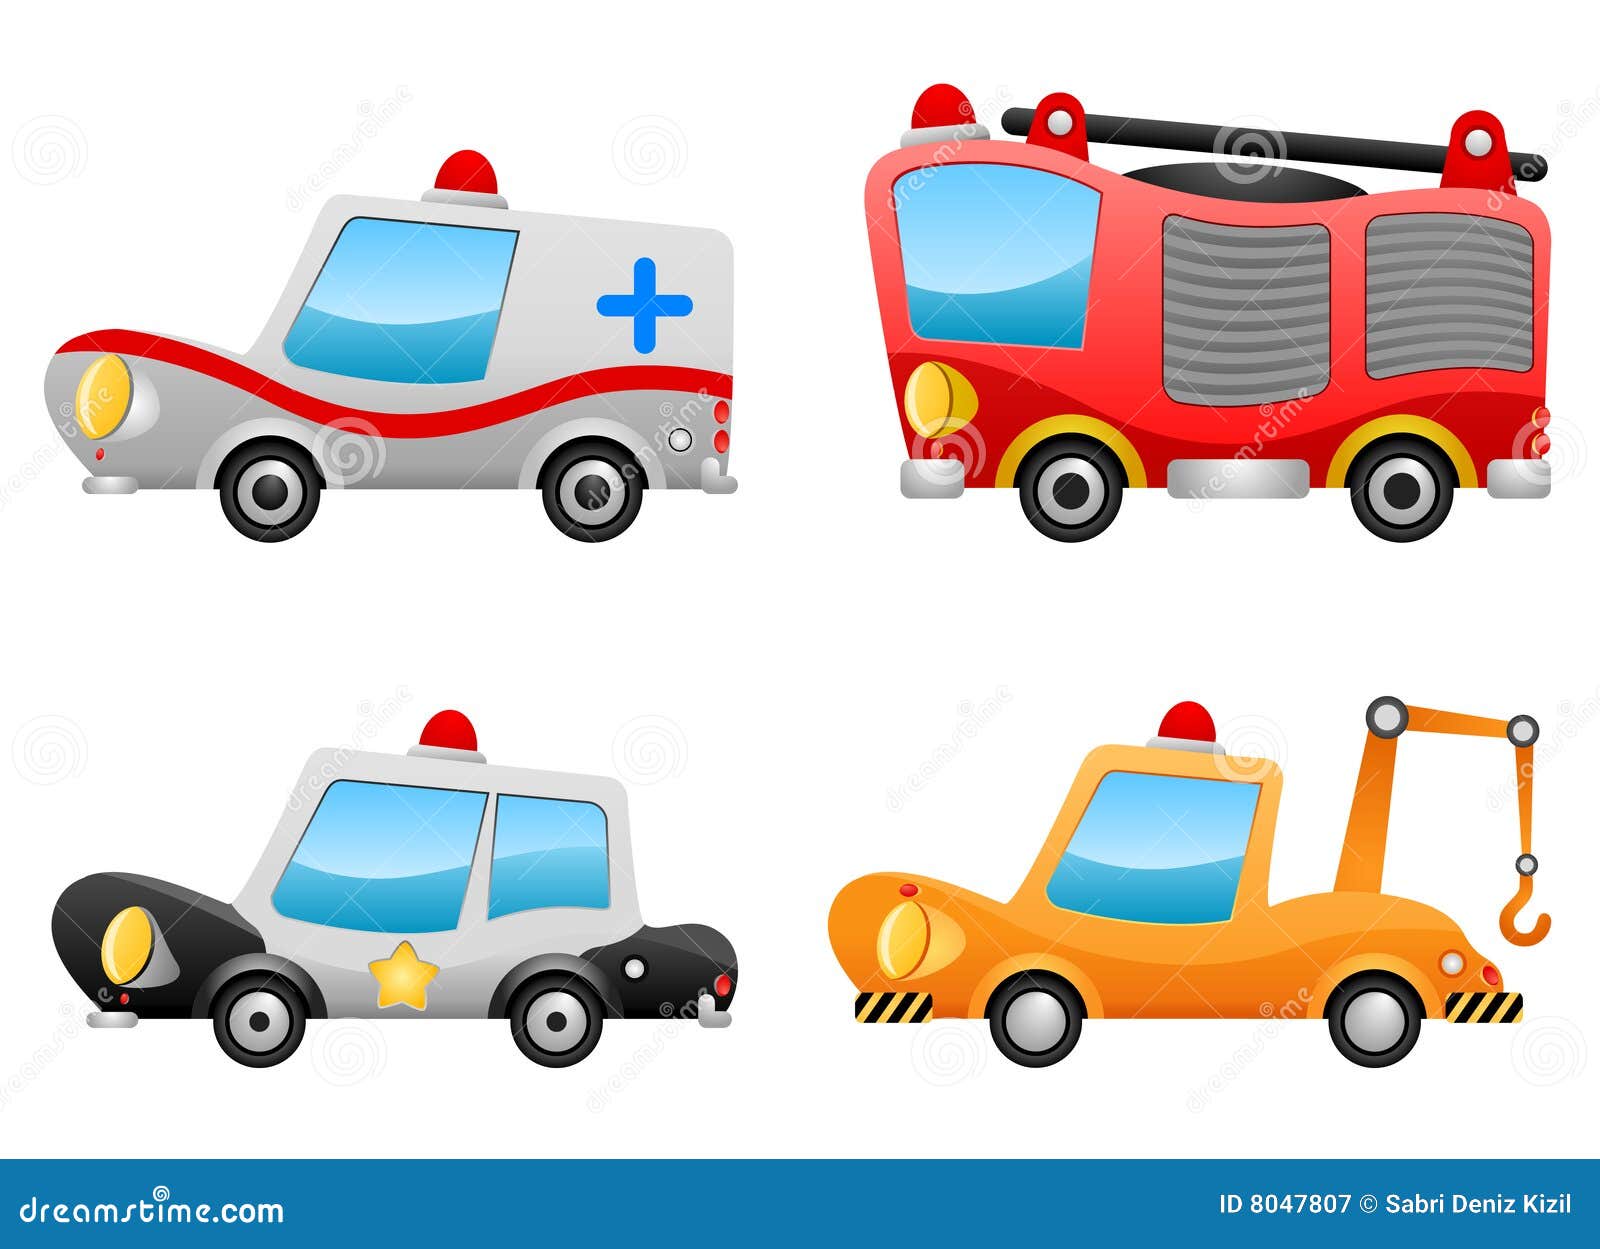 Cute Vehicle Vector Stock Illustrations – 49,793 Cute Vehicle